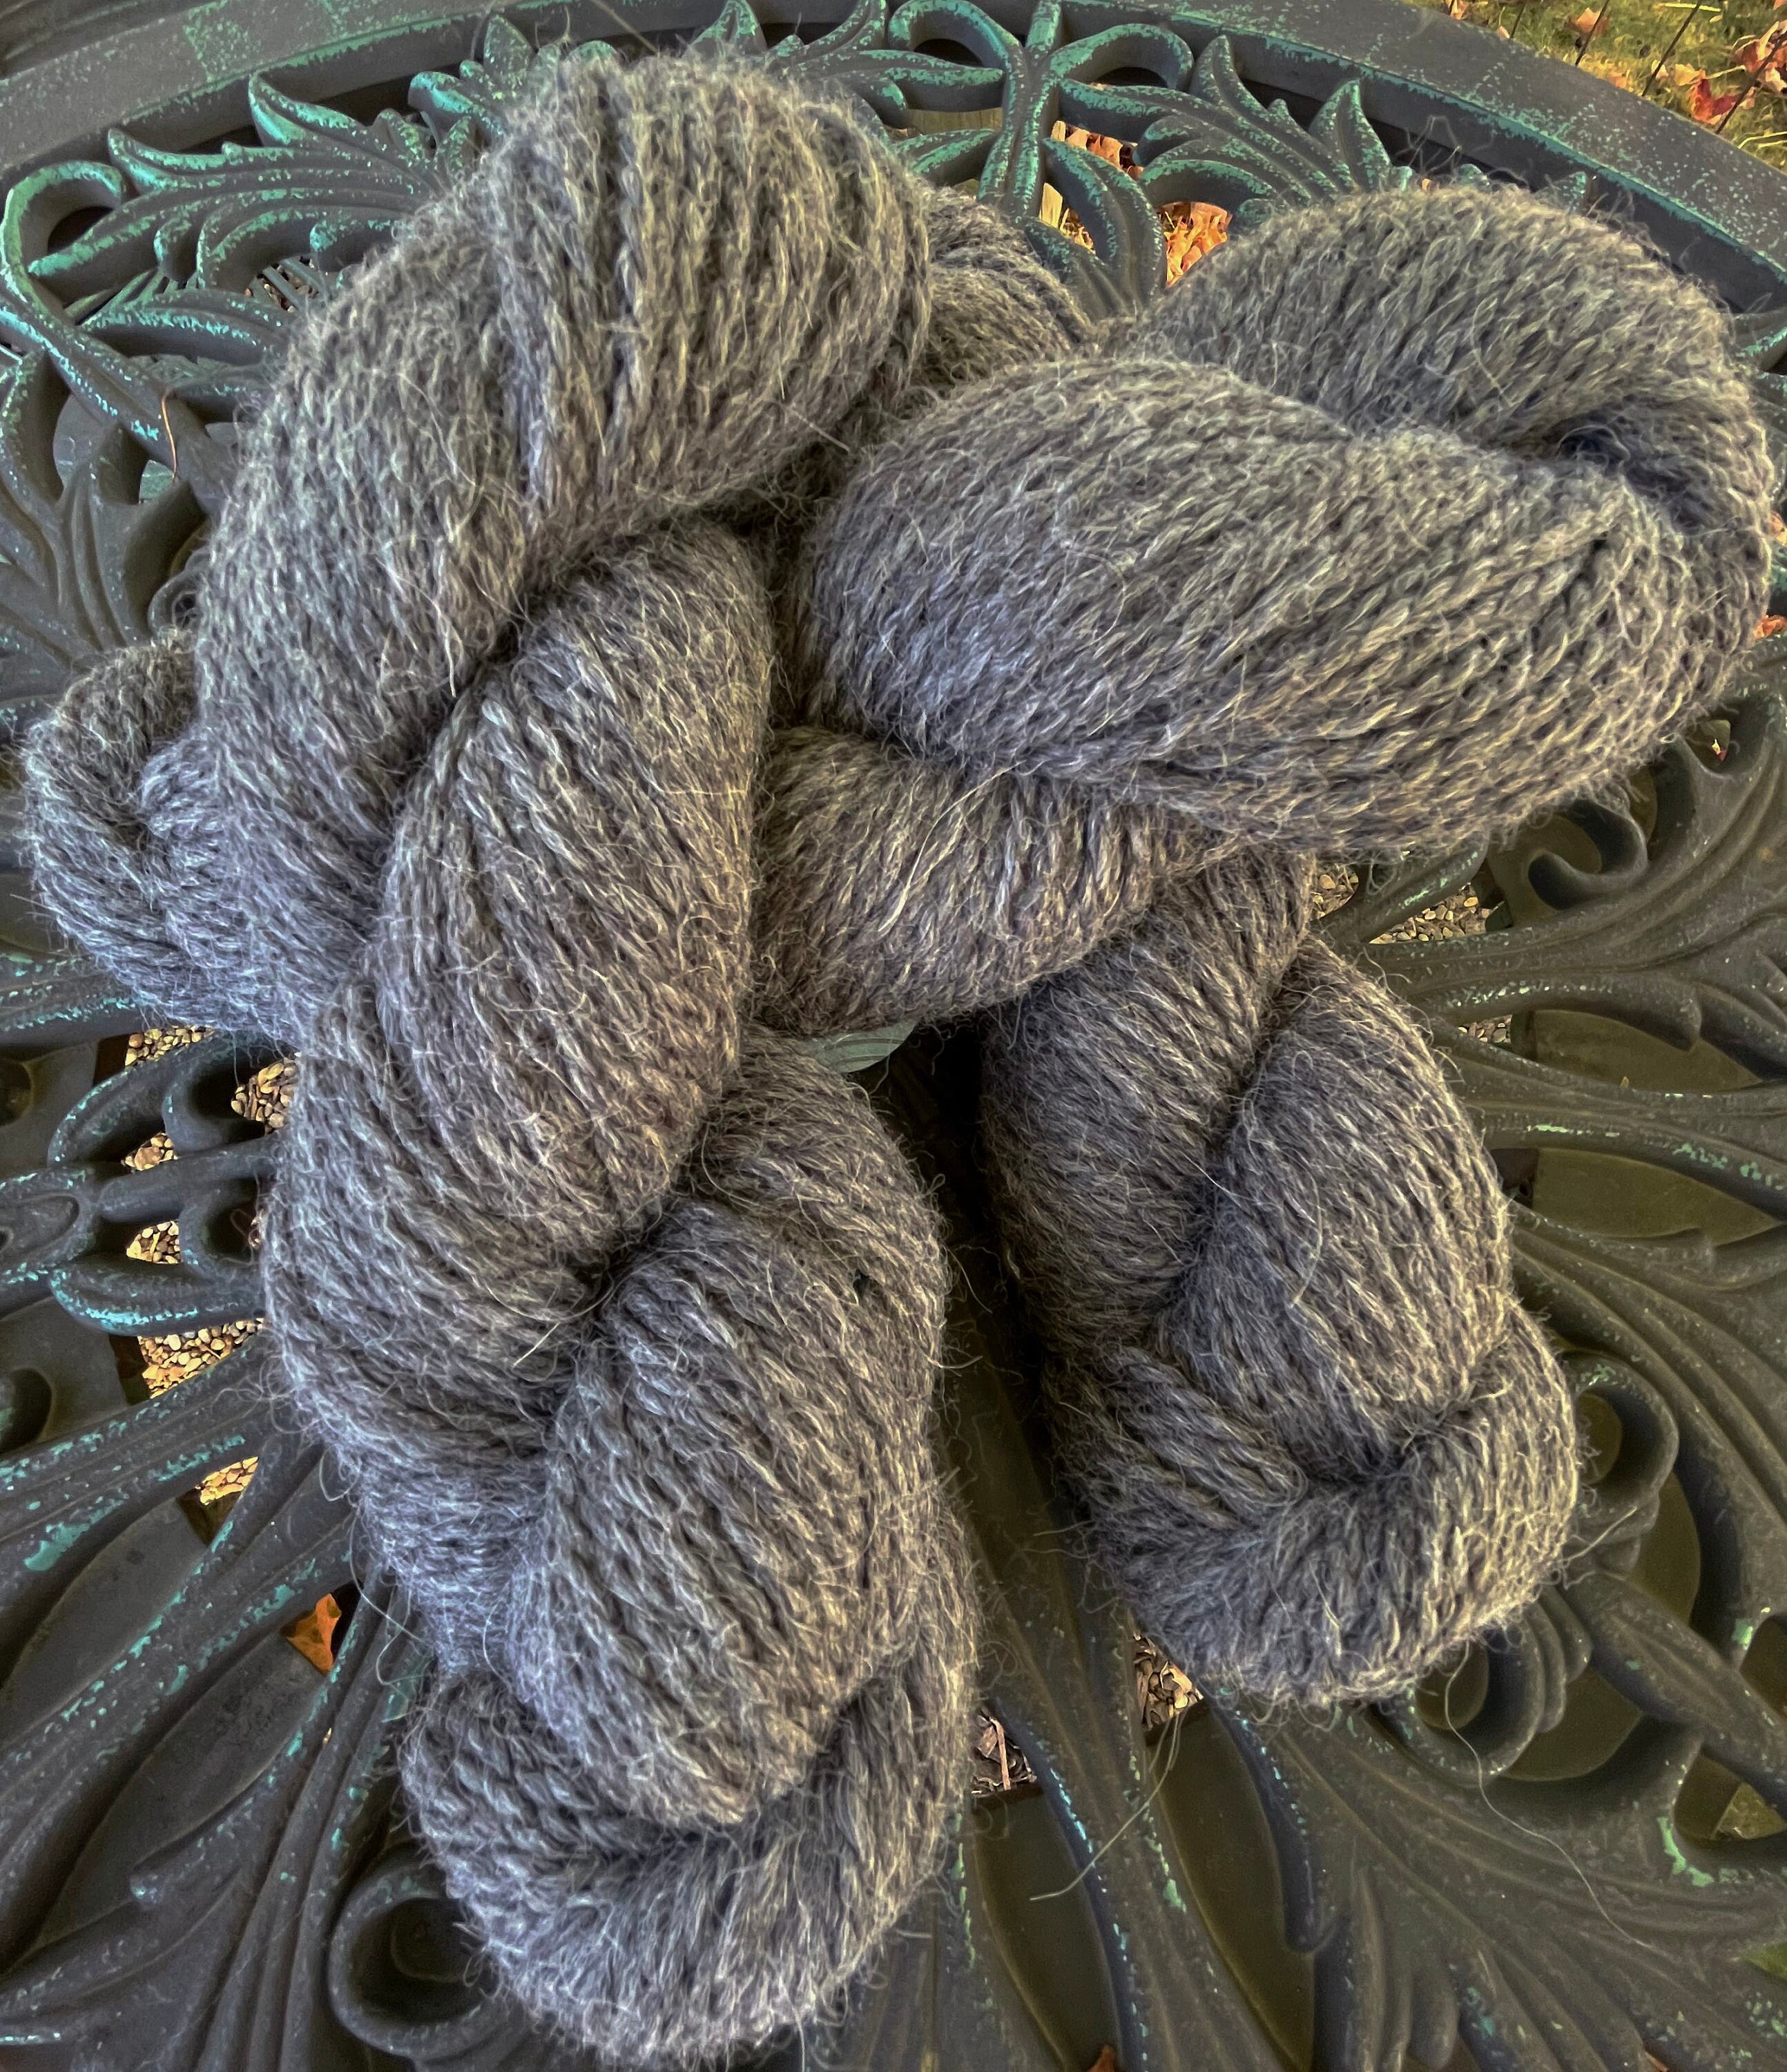 Slate Grey Wool Roving for Needle Felting, Wet Felting, Spinning, Dyed  Felting Wool, Gray, Dark Heather Grey, Fiber Art Supplies 